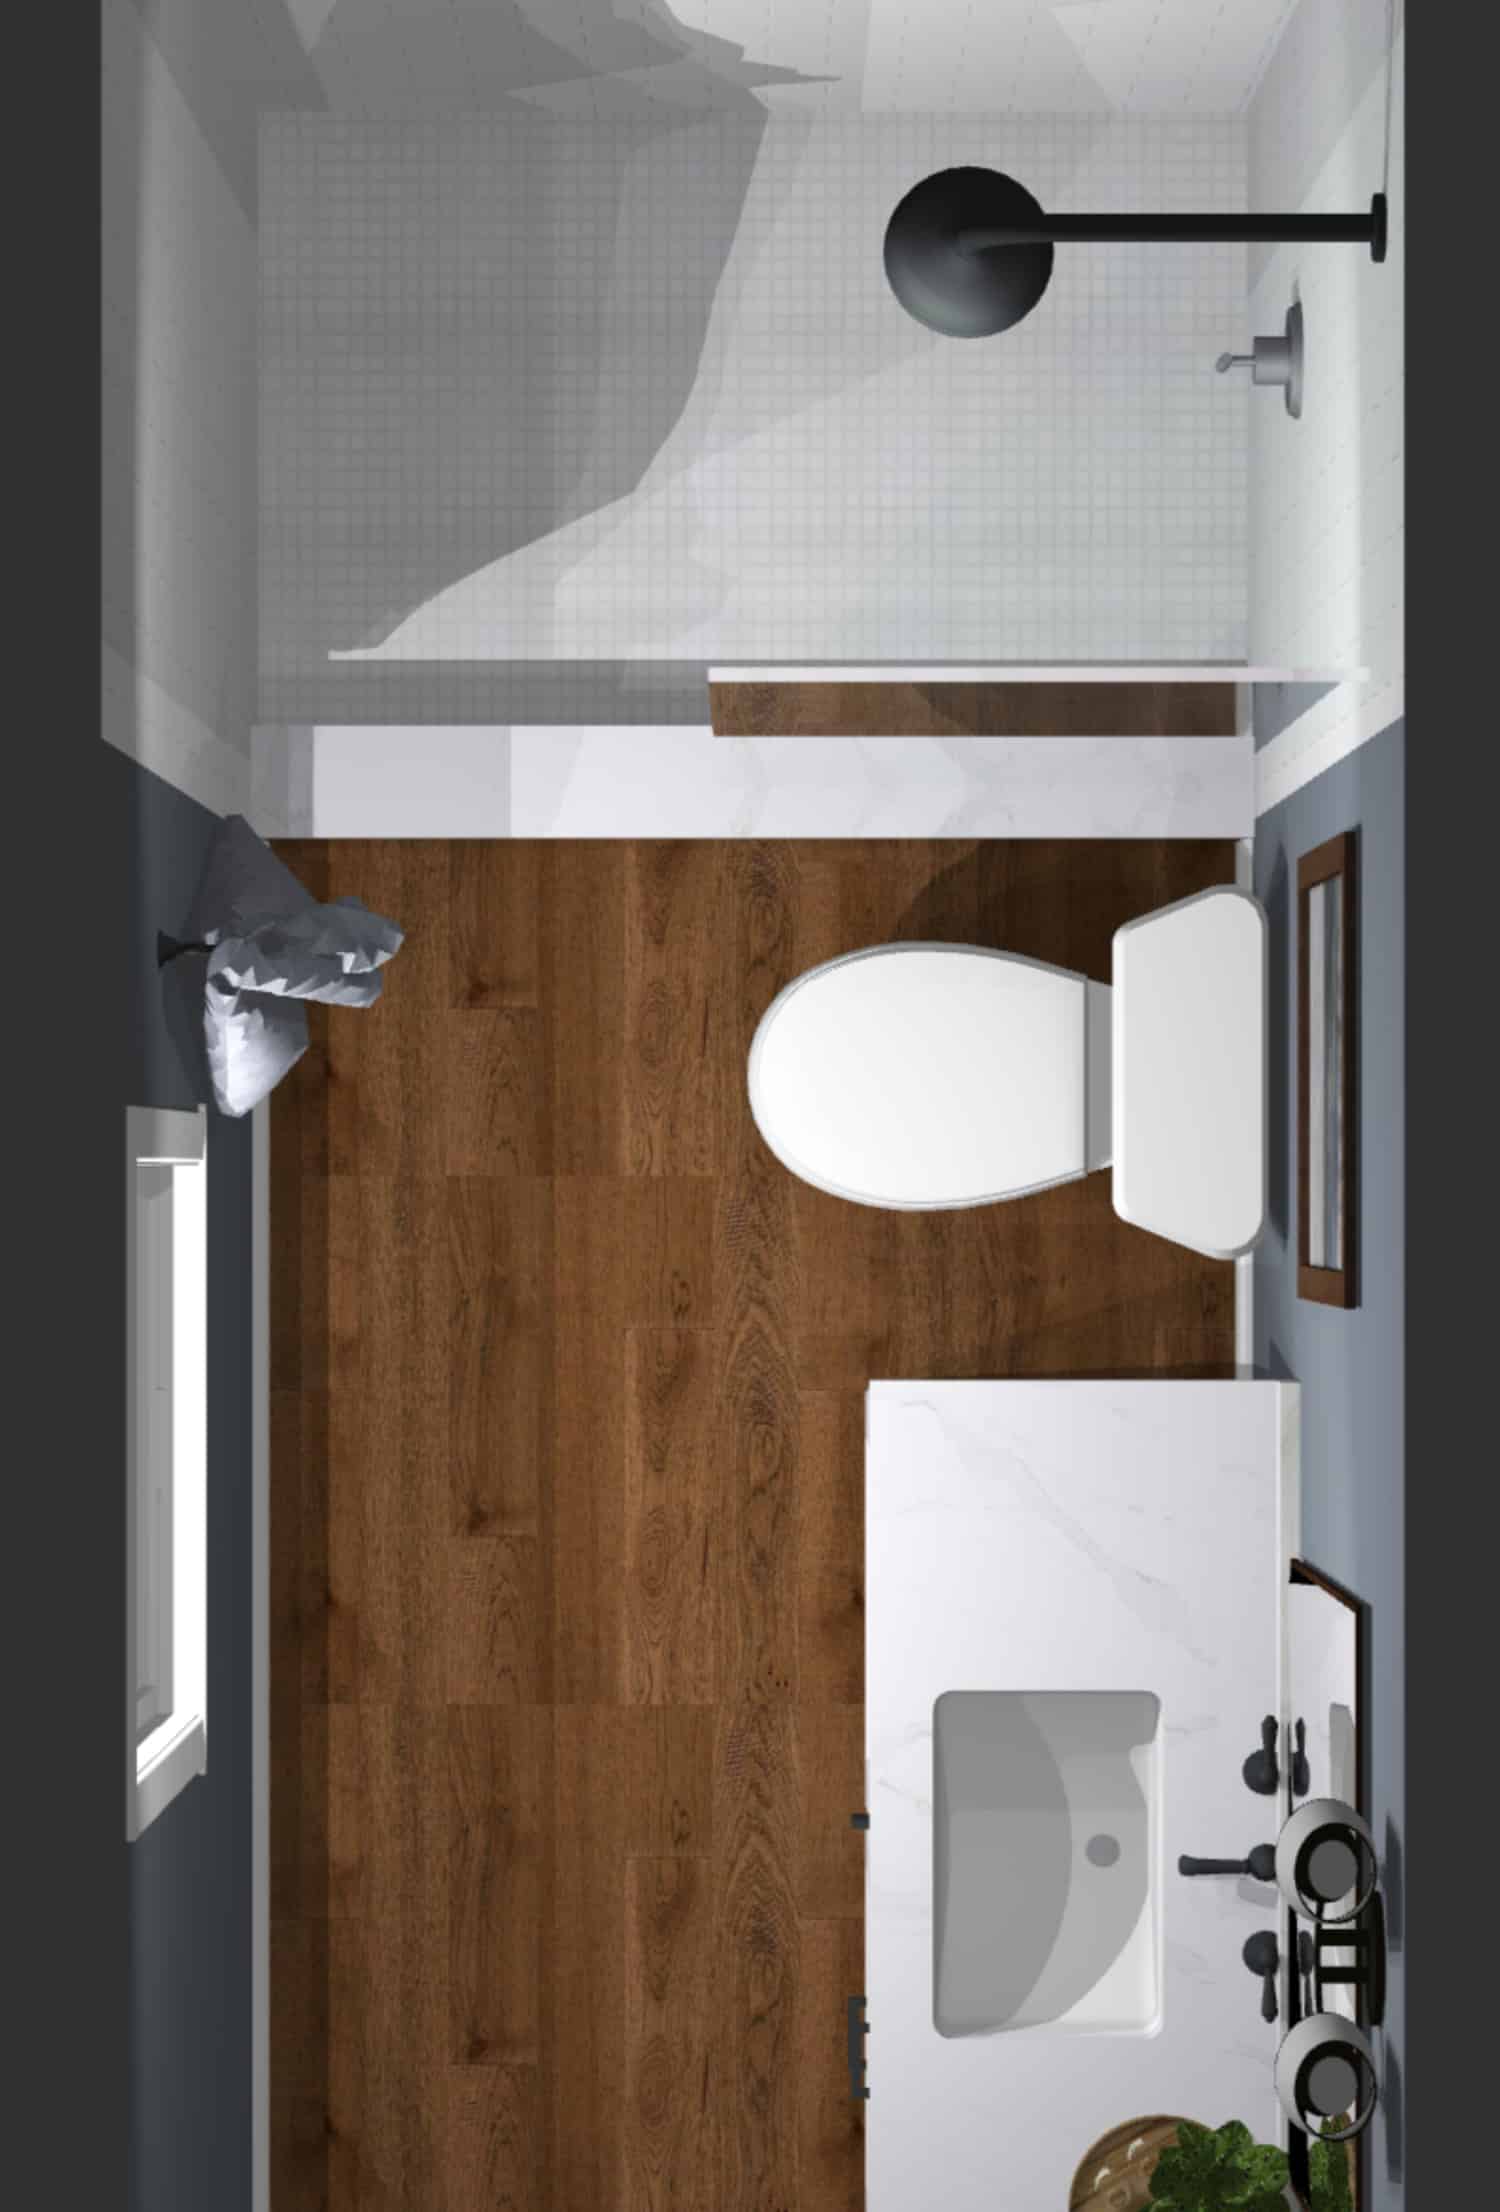 Overhead view of bathroom design concept